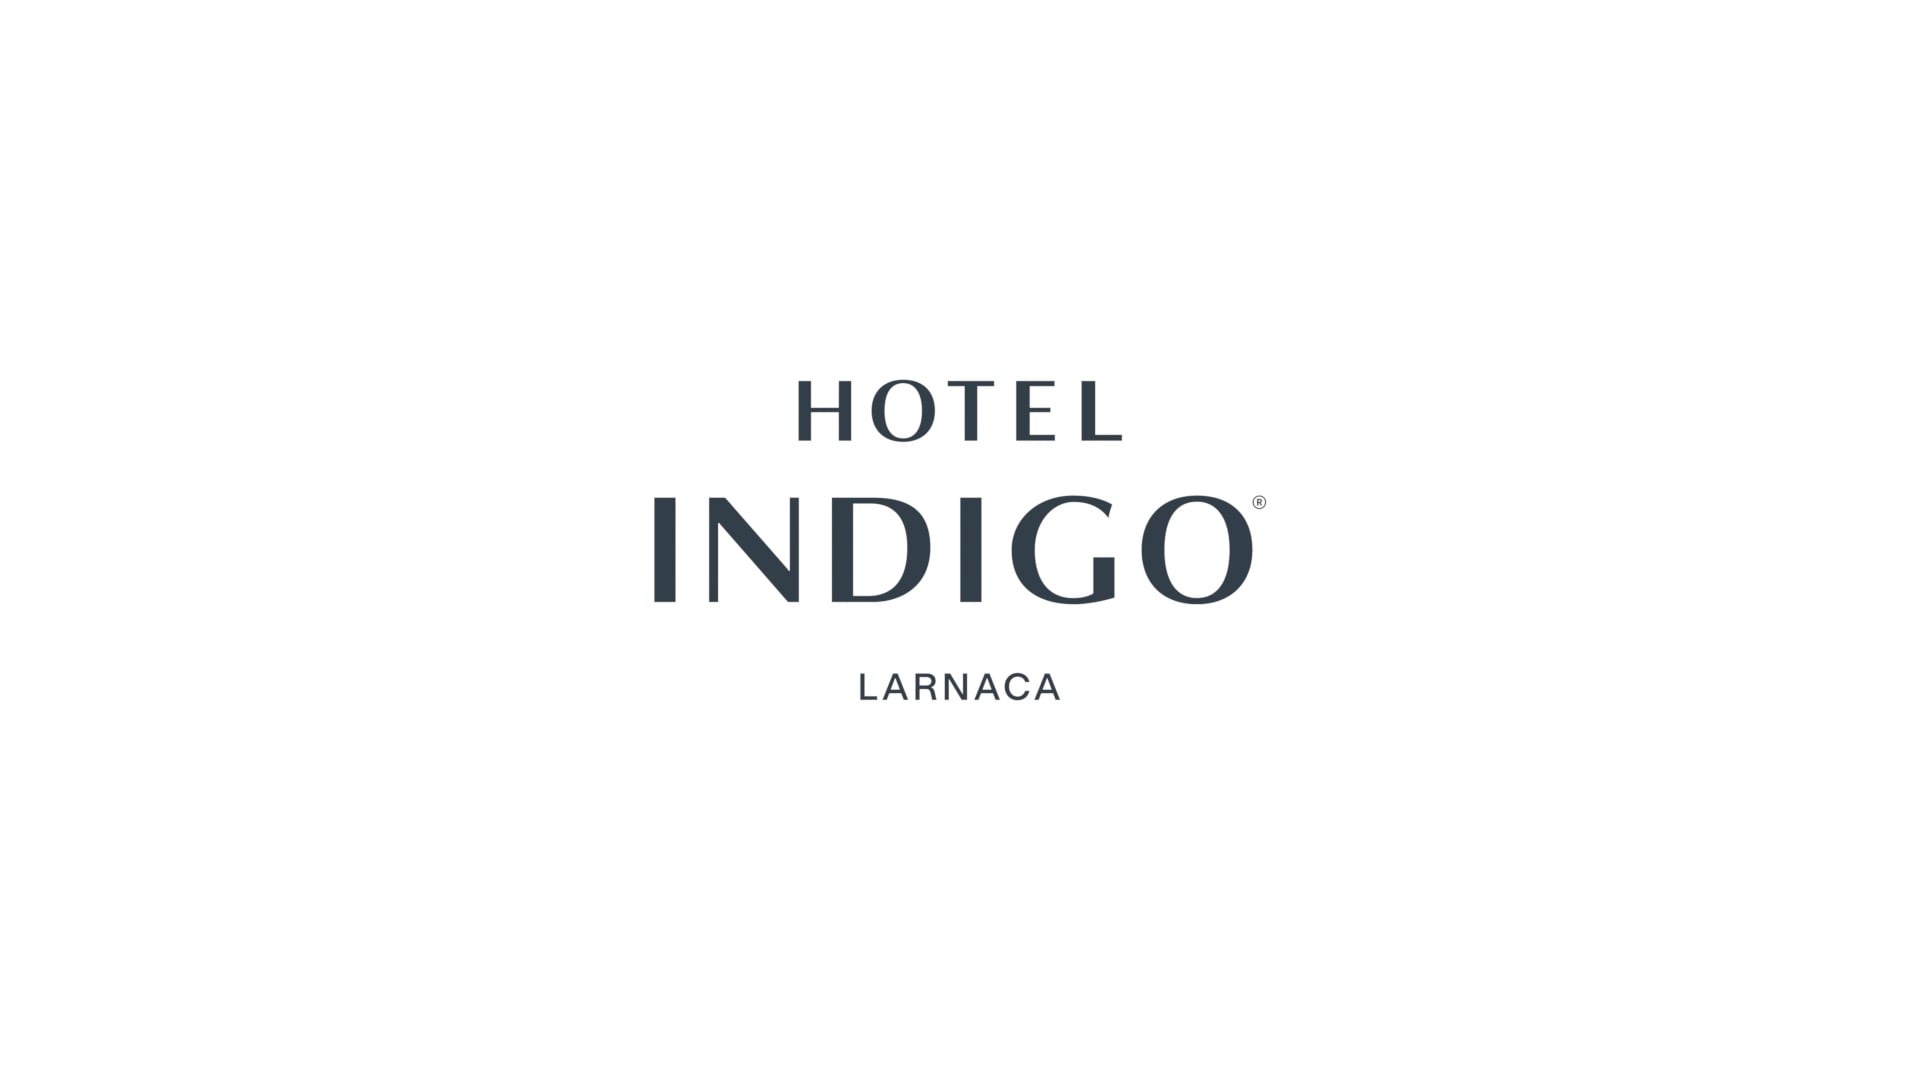 INDIGO HOTEL - LARNACA, CYPRUS